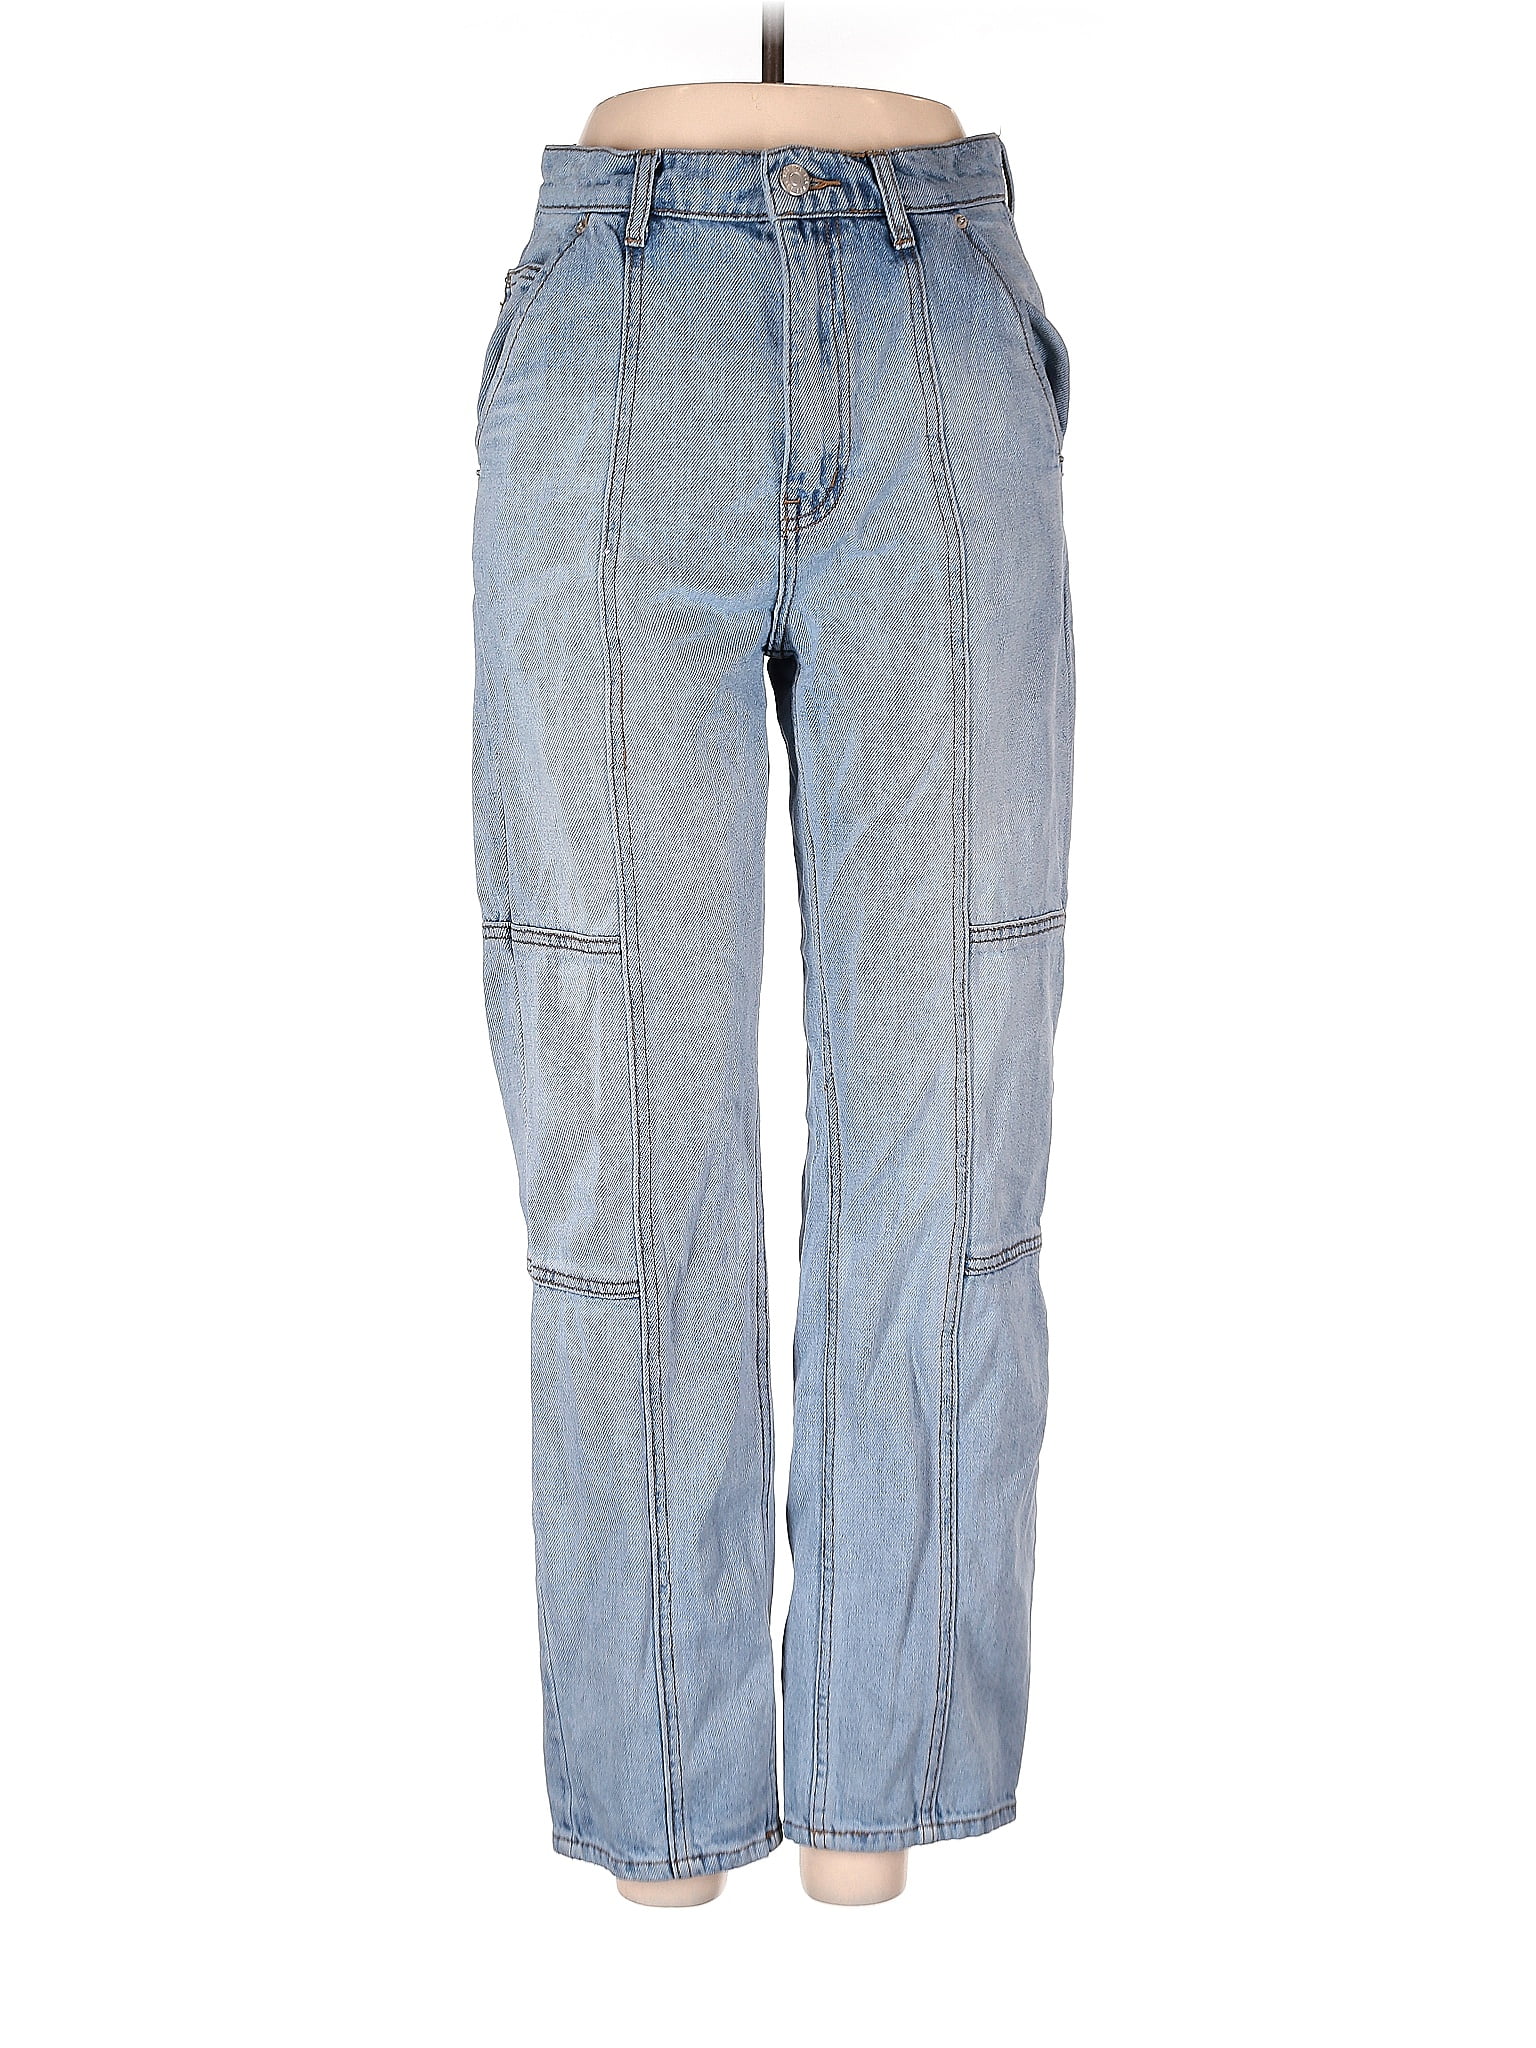 BDG 100% Cotton Solid Blue Jeans 26 Waist - 62% off | thredUP